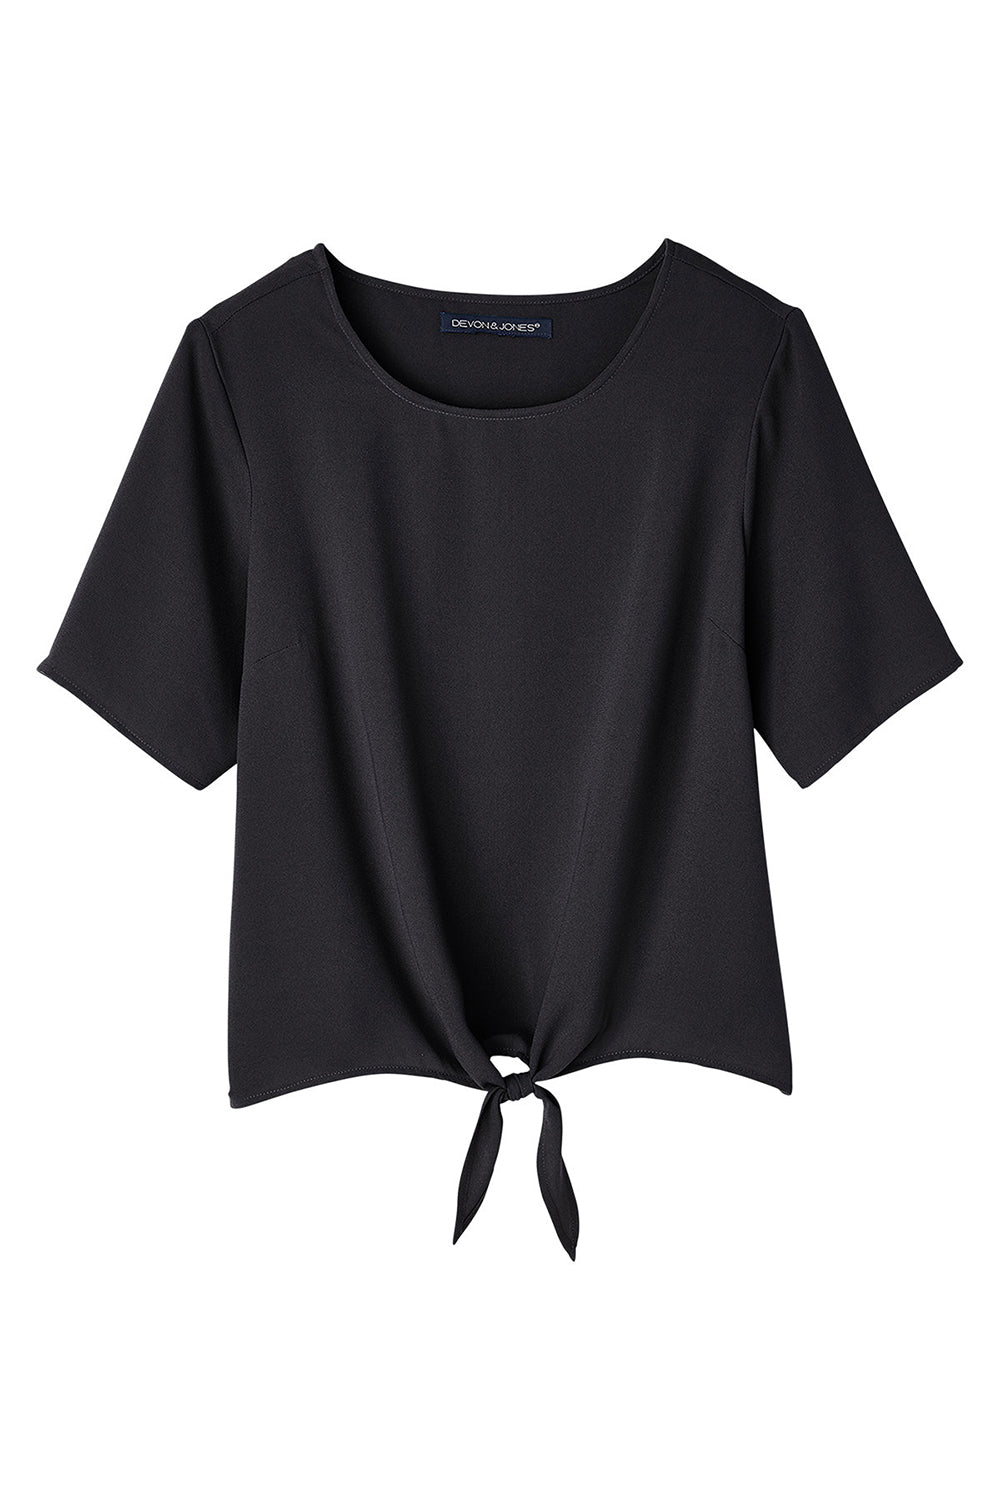 Devon & Jones DP617W Womens Perfect Fit Tie Front Short Sleeve Blouse Black Flat Front